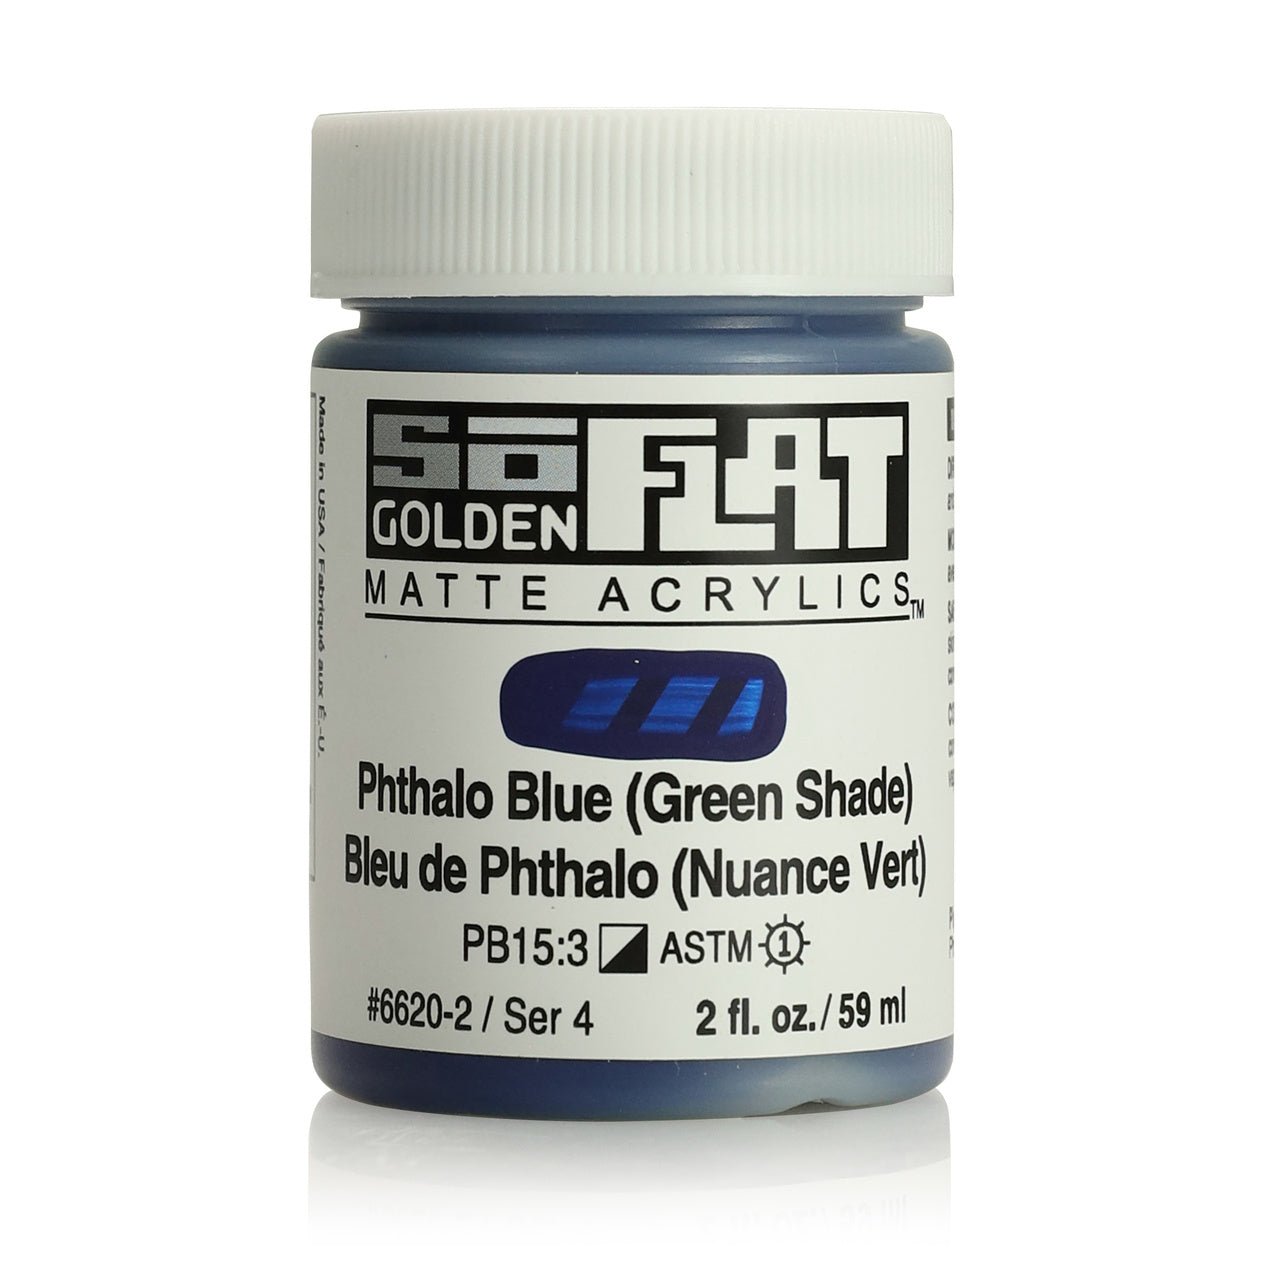 Golden SoFlat Matte Acrylic Paint - Phthalo Blue (Green Shade) 2 oz jar - merriartist.com